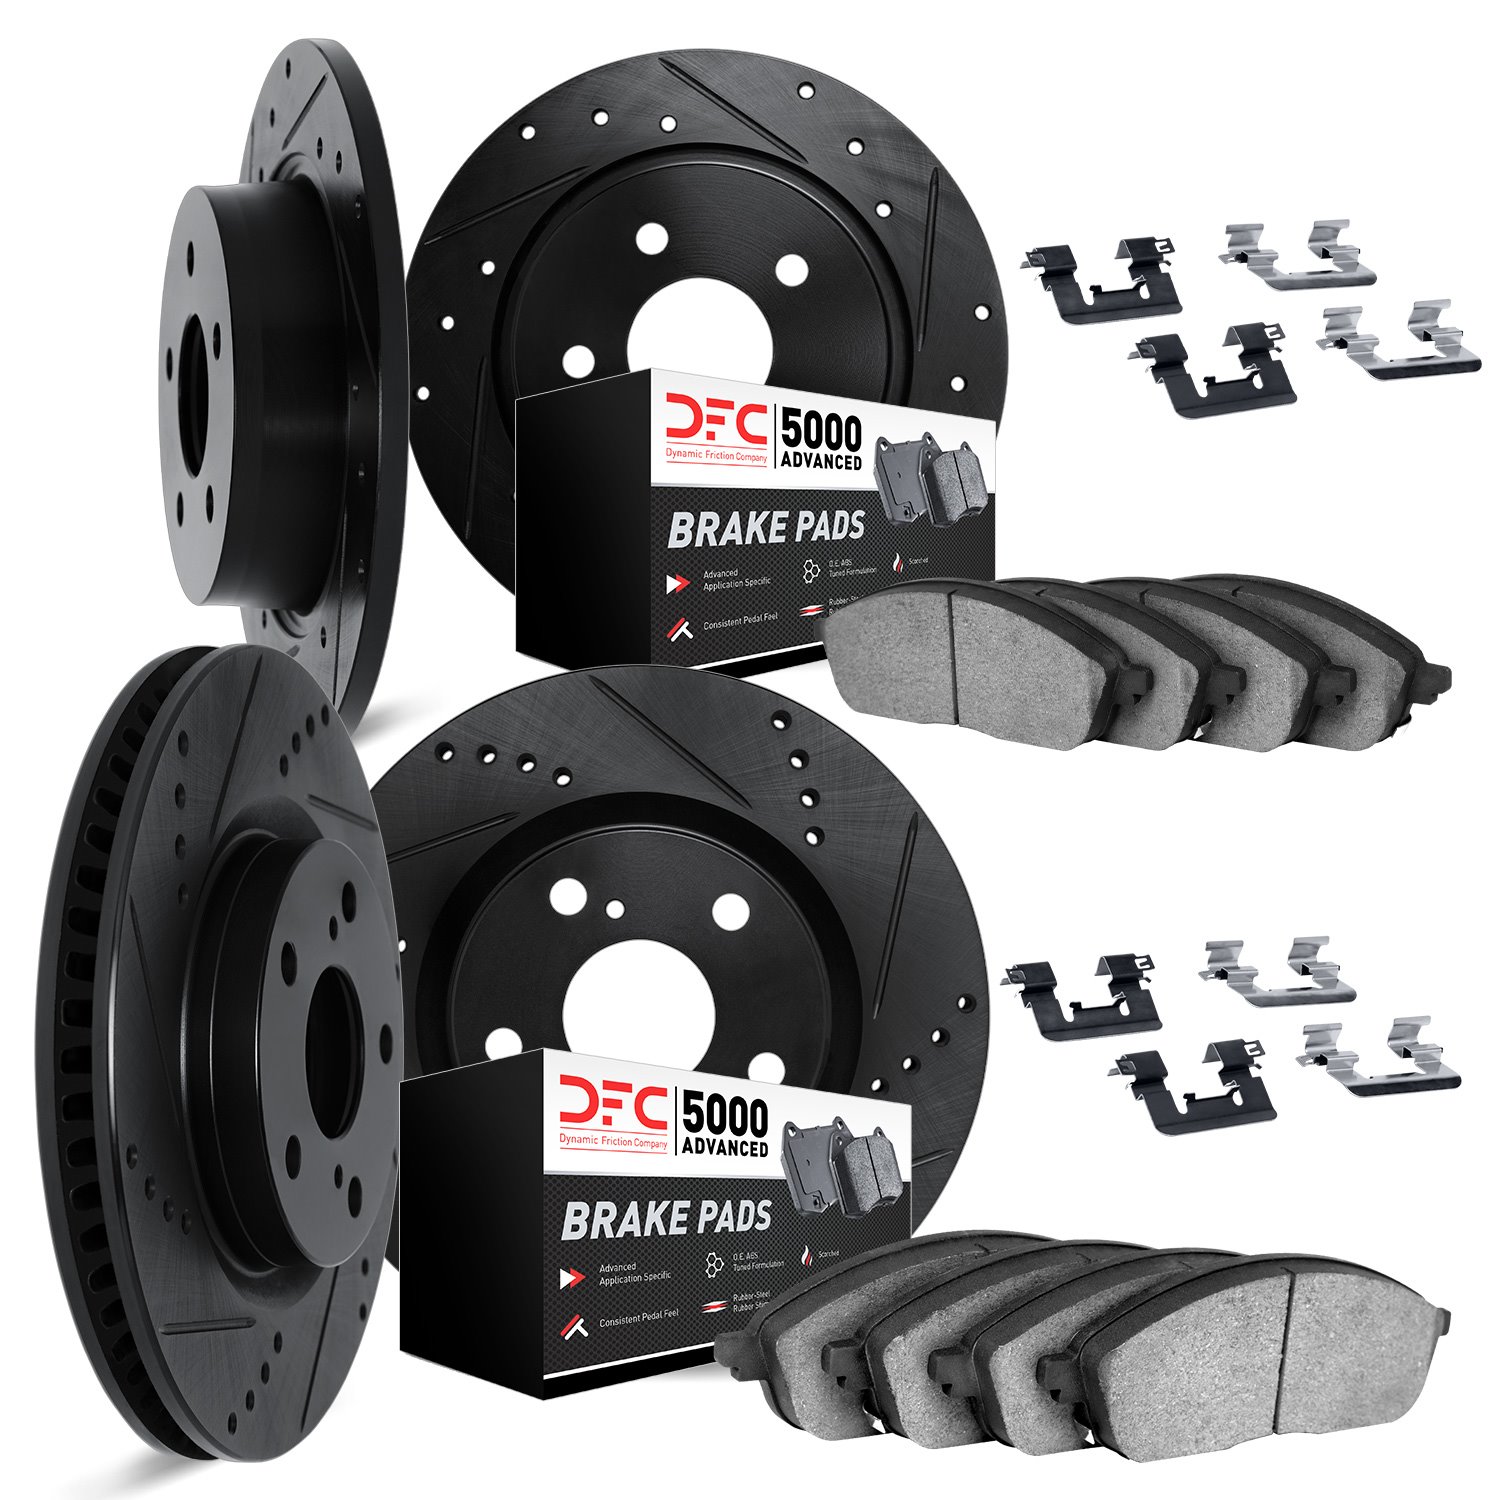 8514-03082 Drilled/Slotted Brake Rotors w/5000 Advanced Brake Pads Kit & Hardware [Black], Fits Select Kia/Hyundai/Genesis, Posi